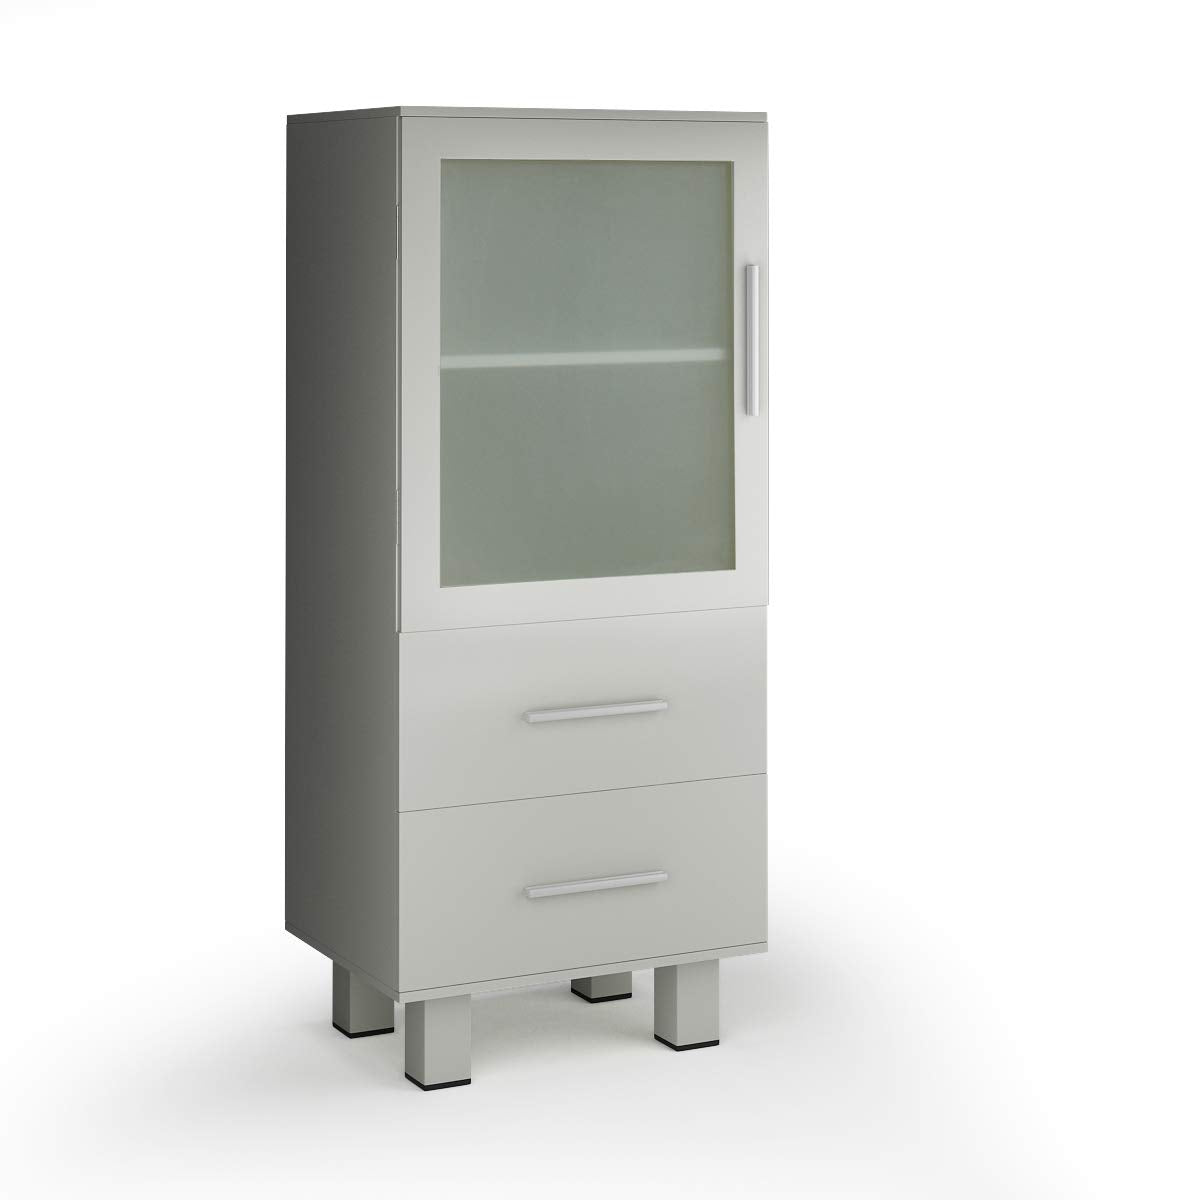 Giantex Floor Storage Cabinet Organizer Stand Chest w/ 1 Door and 2 Drawers Adjustable Shelf